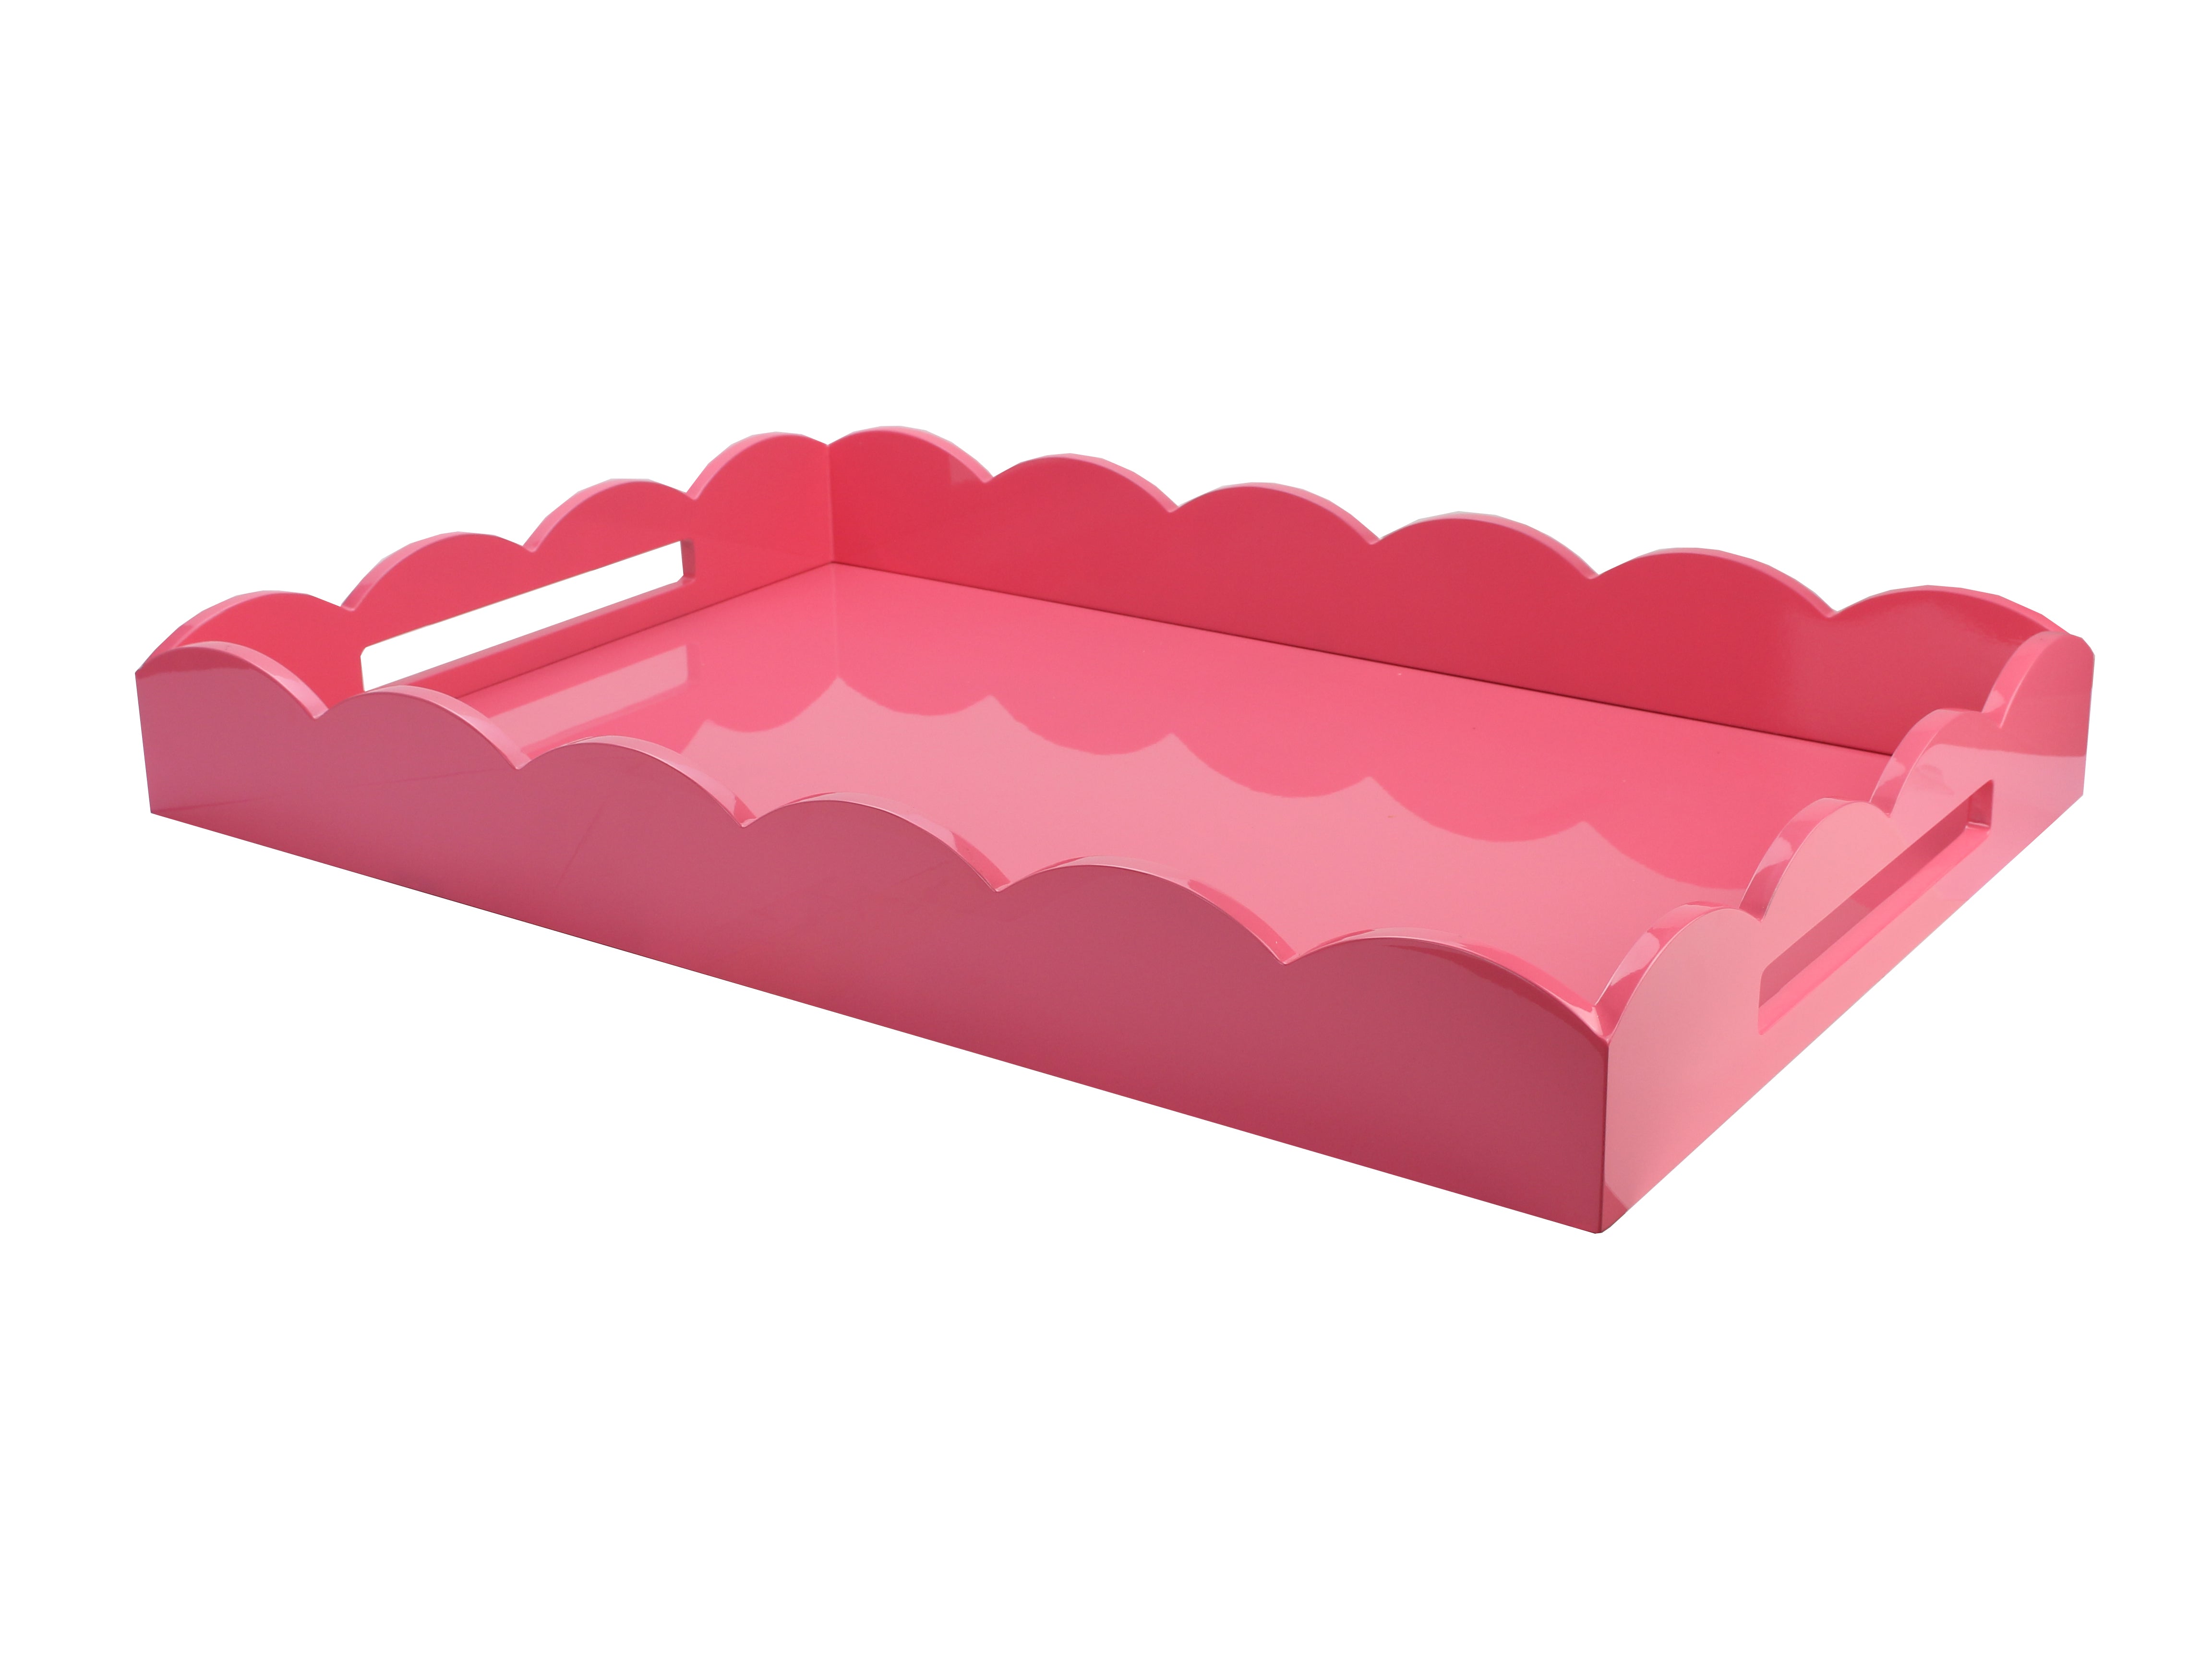 Scalloped tray | Large pink | Addison Ross